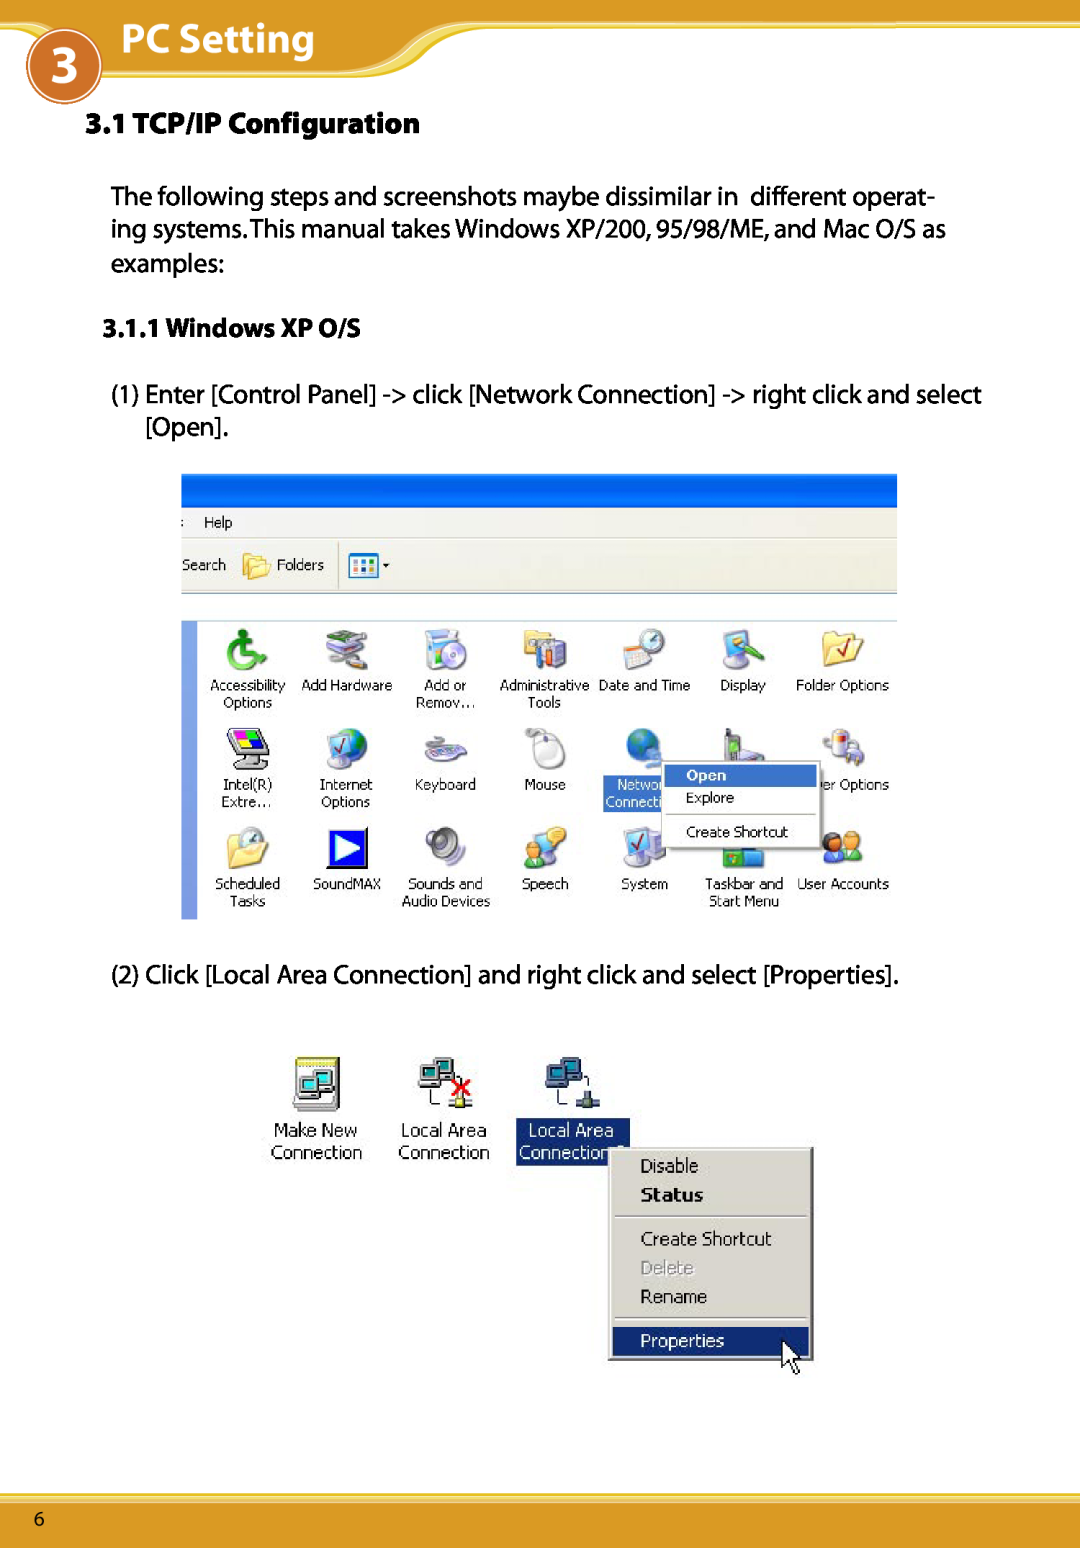 Allied Telesis CG-WLBARGS manual 3.1 TCP/IP Configuration, Windows XP O/S 